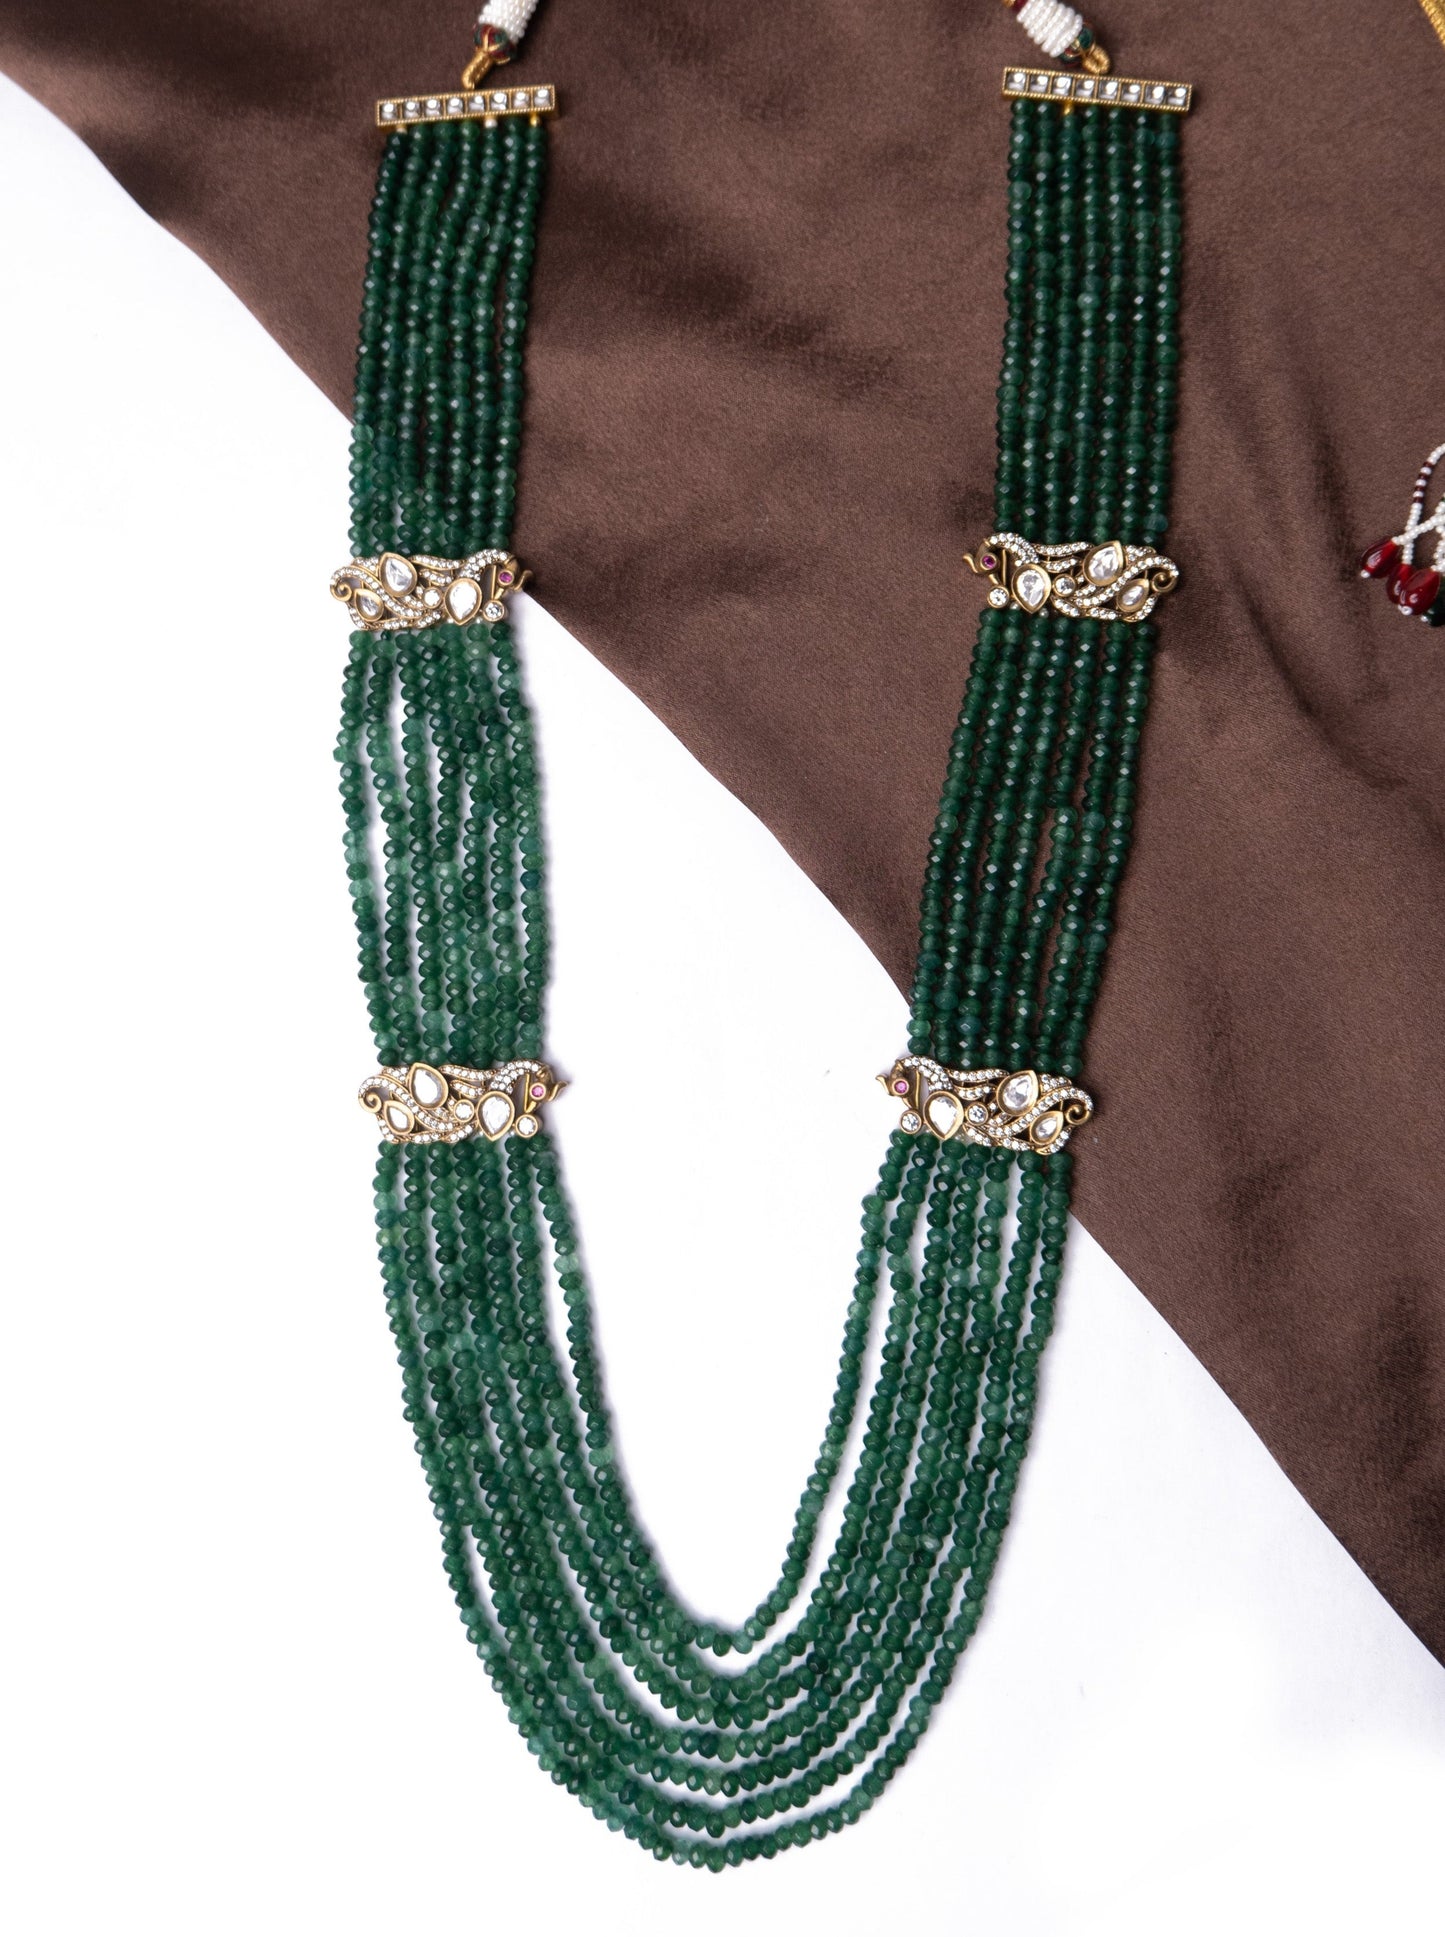 Seven layer emerald grren necklace with polki motifs